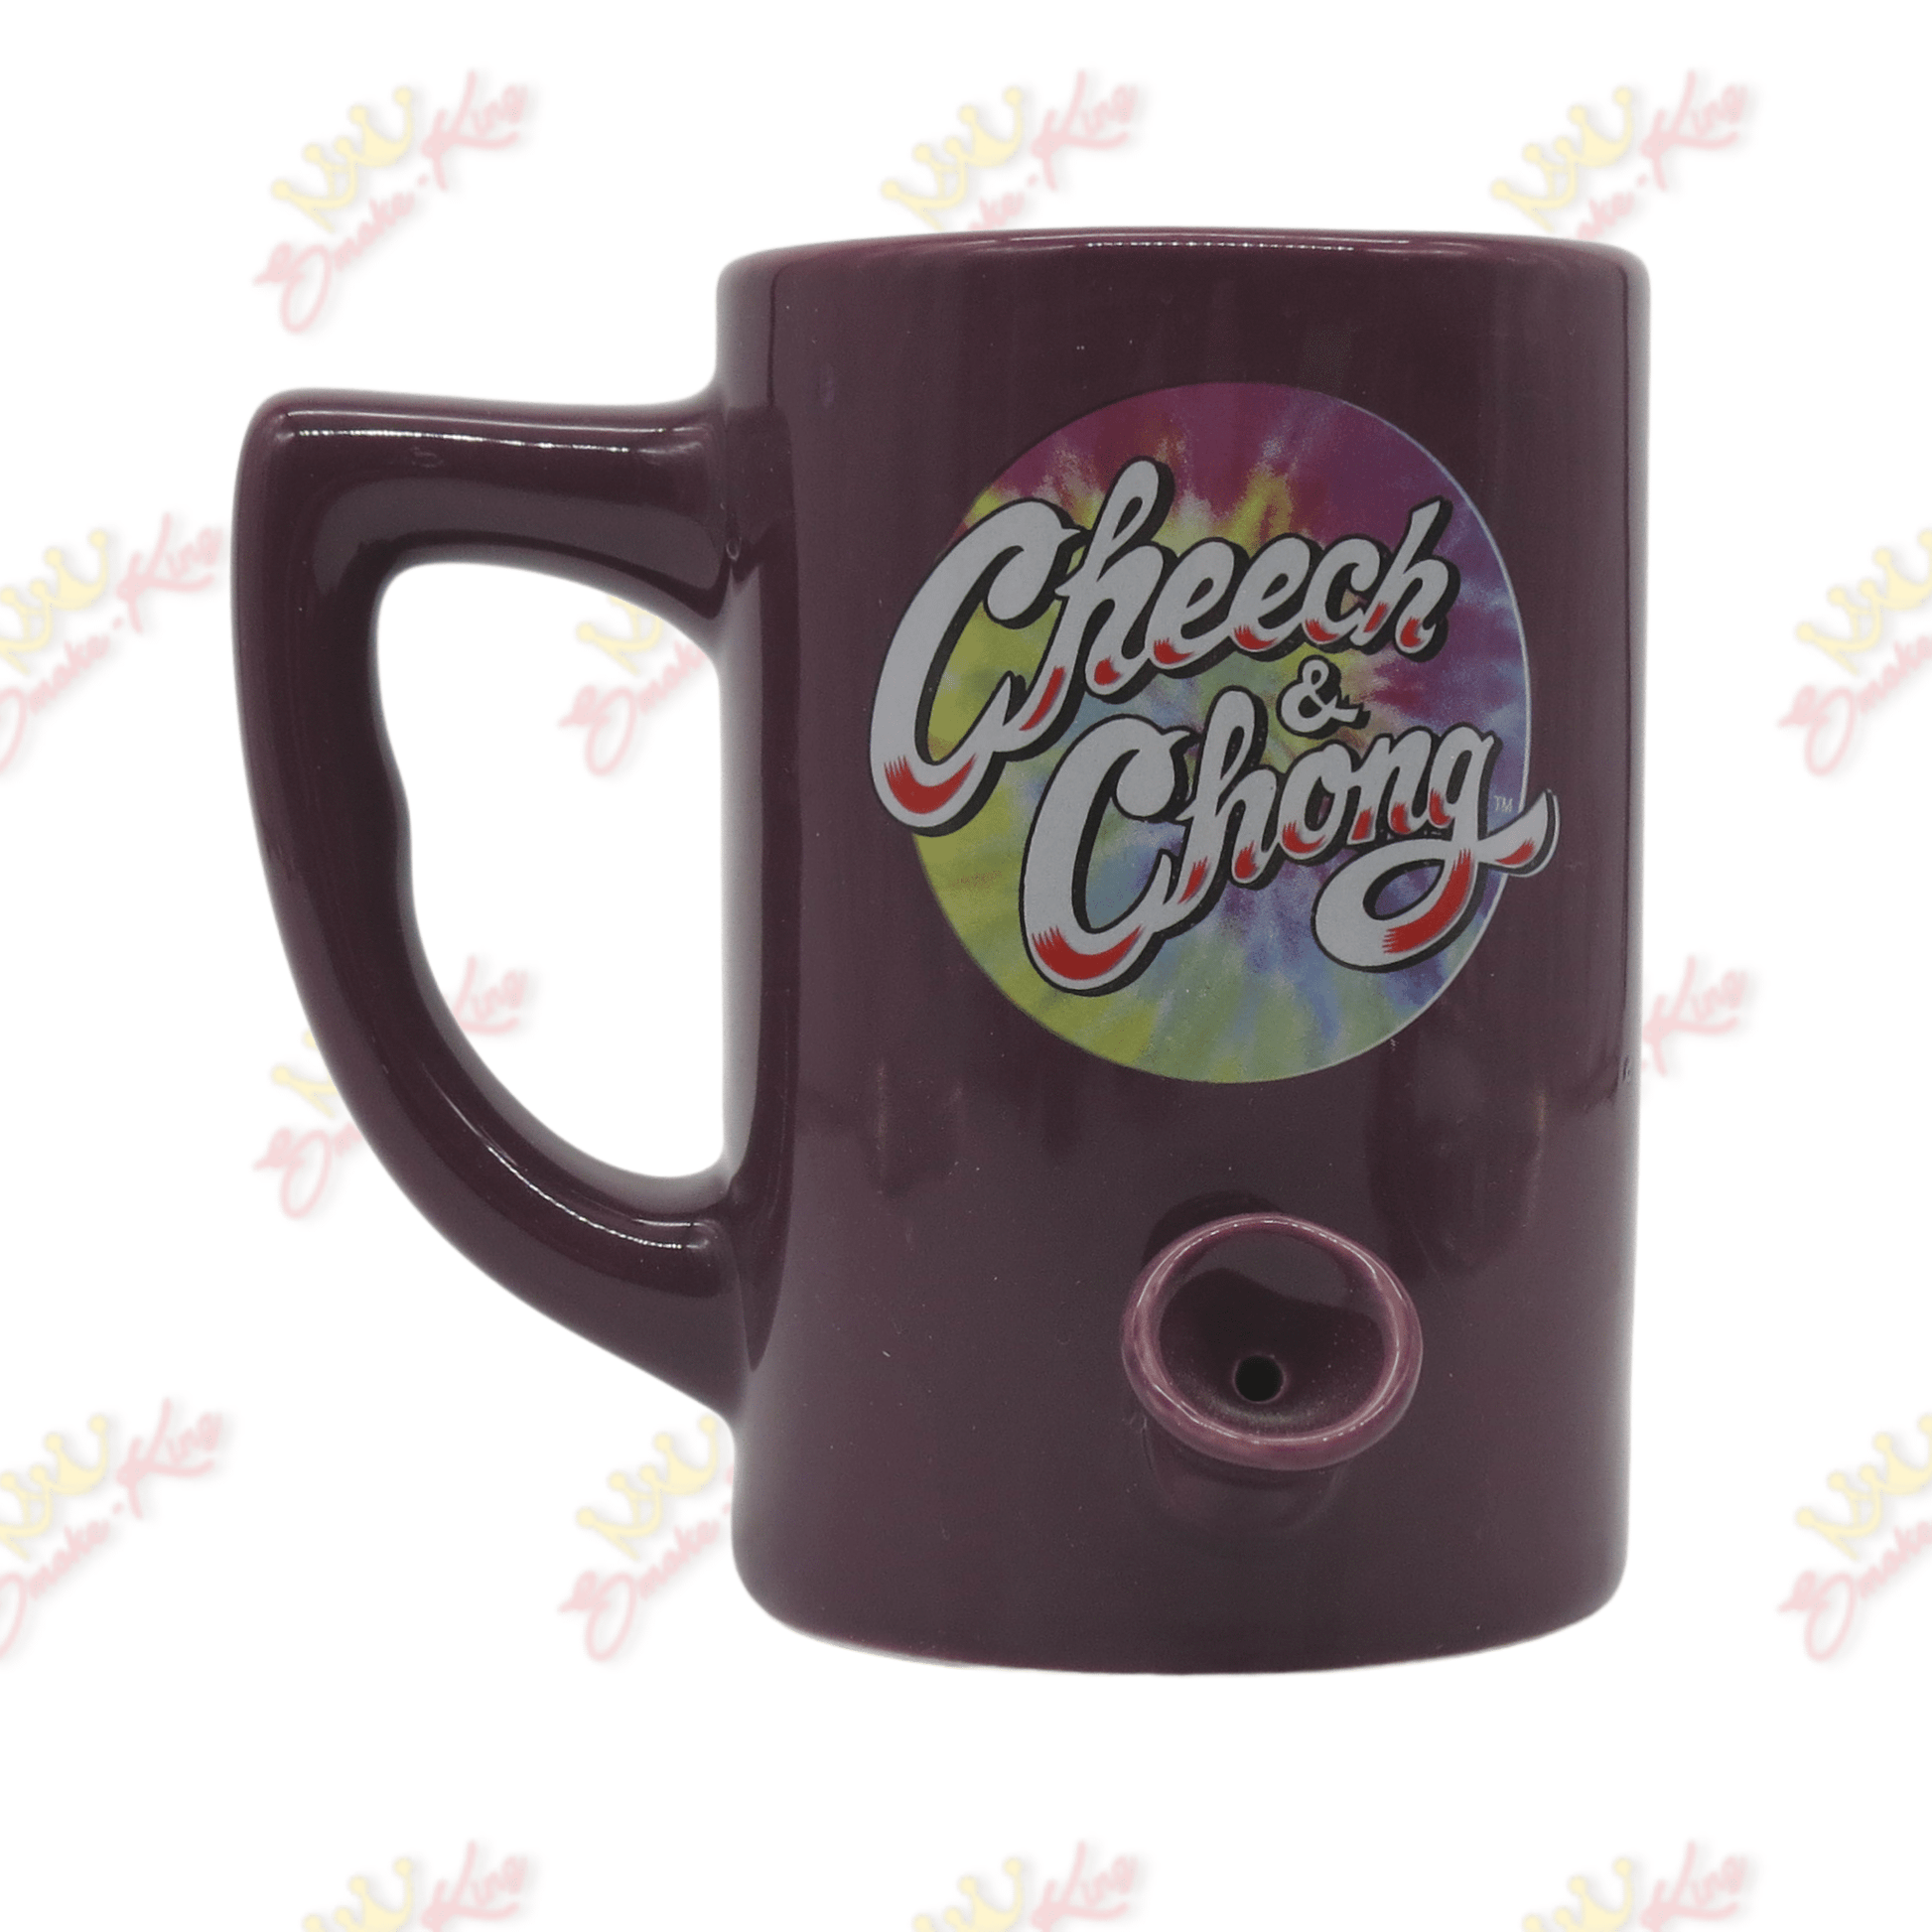 Smoke King Purple Ceramic Mug Pipe Cheech and Chong Ceramic Mug Pipe Cheech and Chong | Smoke King